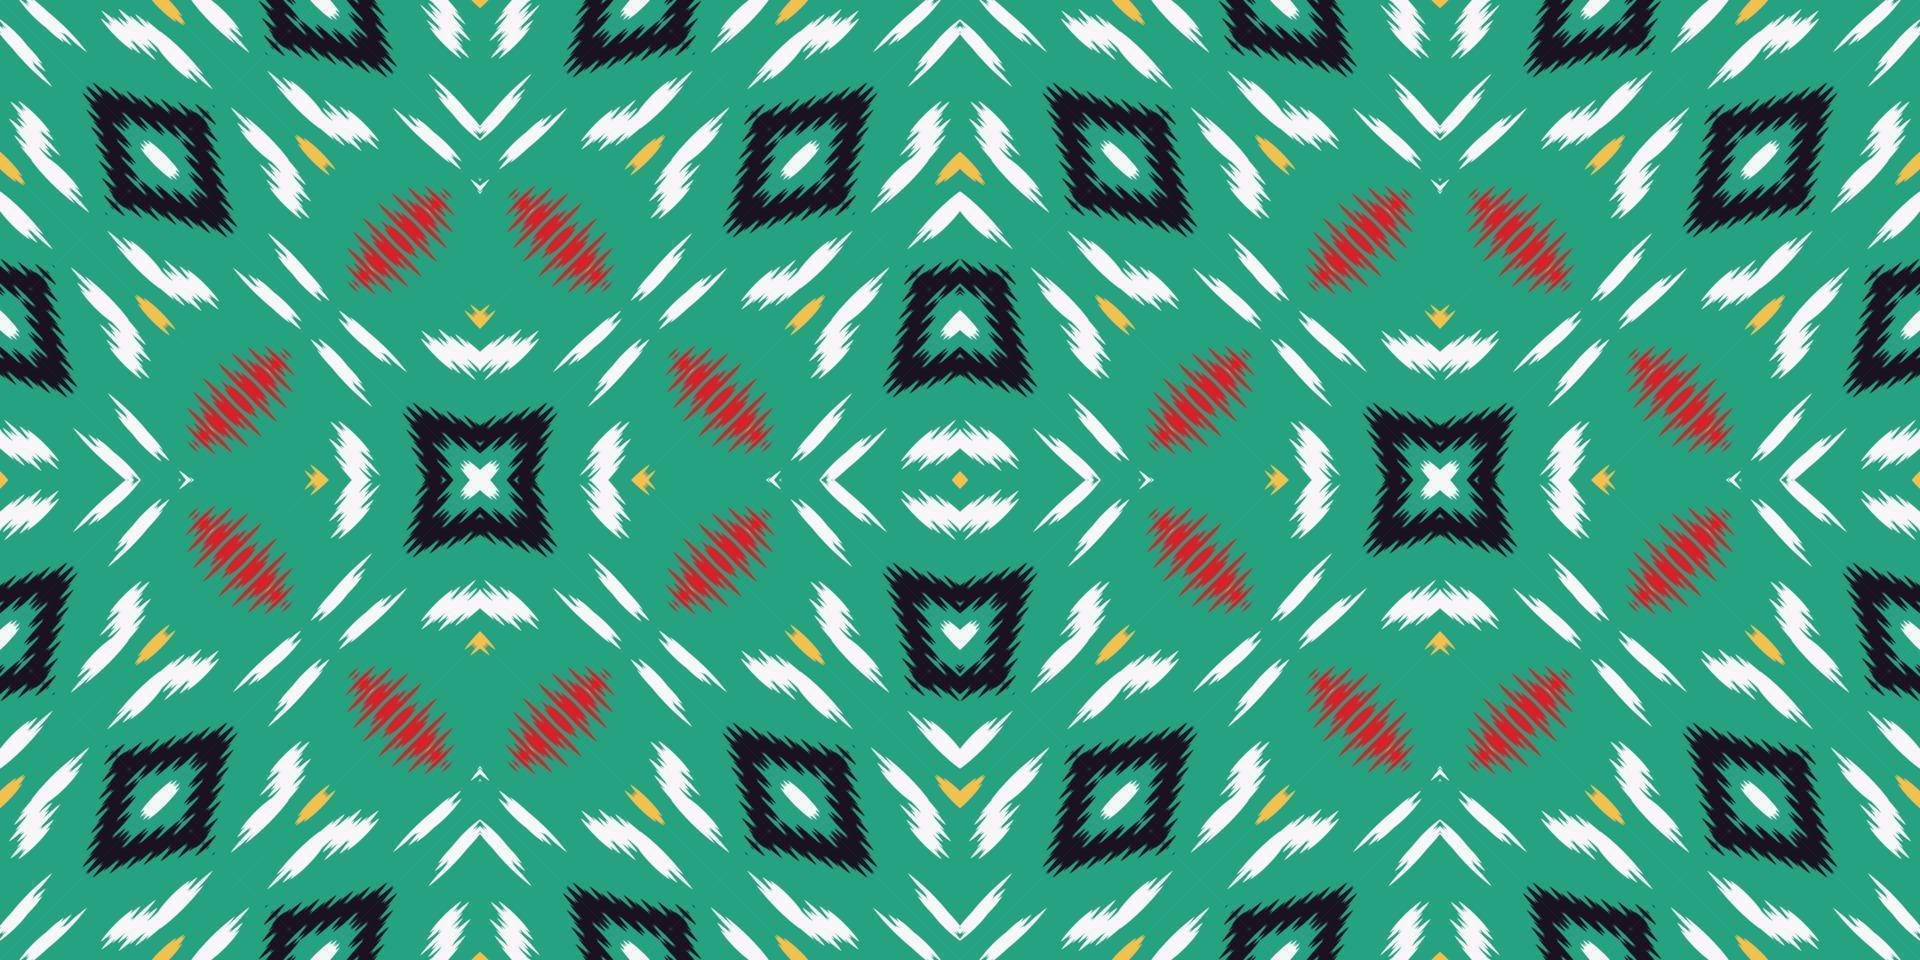 ikat puntos cruz tribal patrón sin costuras. étnico geométrico ikkat batik vector digital diseño textil para estampados tela sari mughal cepillo símbolo franjas textura kurti kurtis kurtas